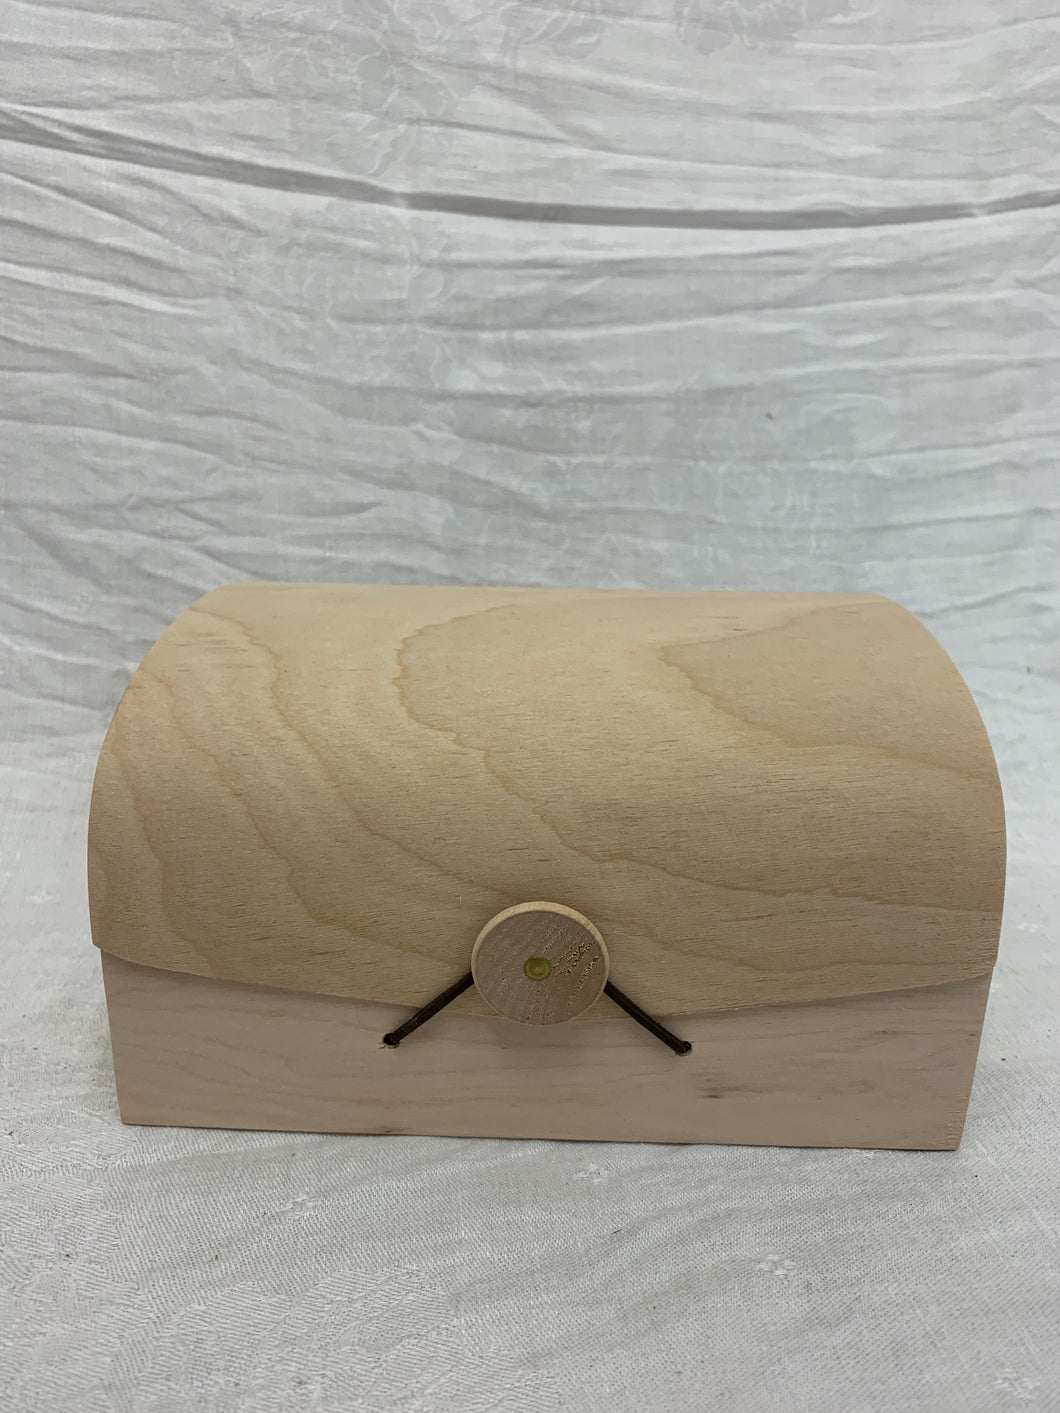 birch wood box - LG(7.5